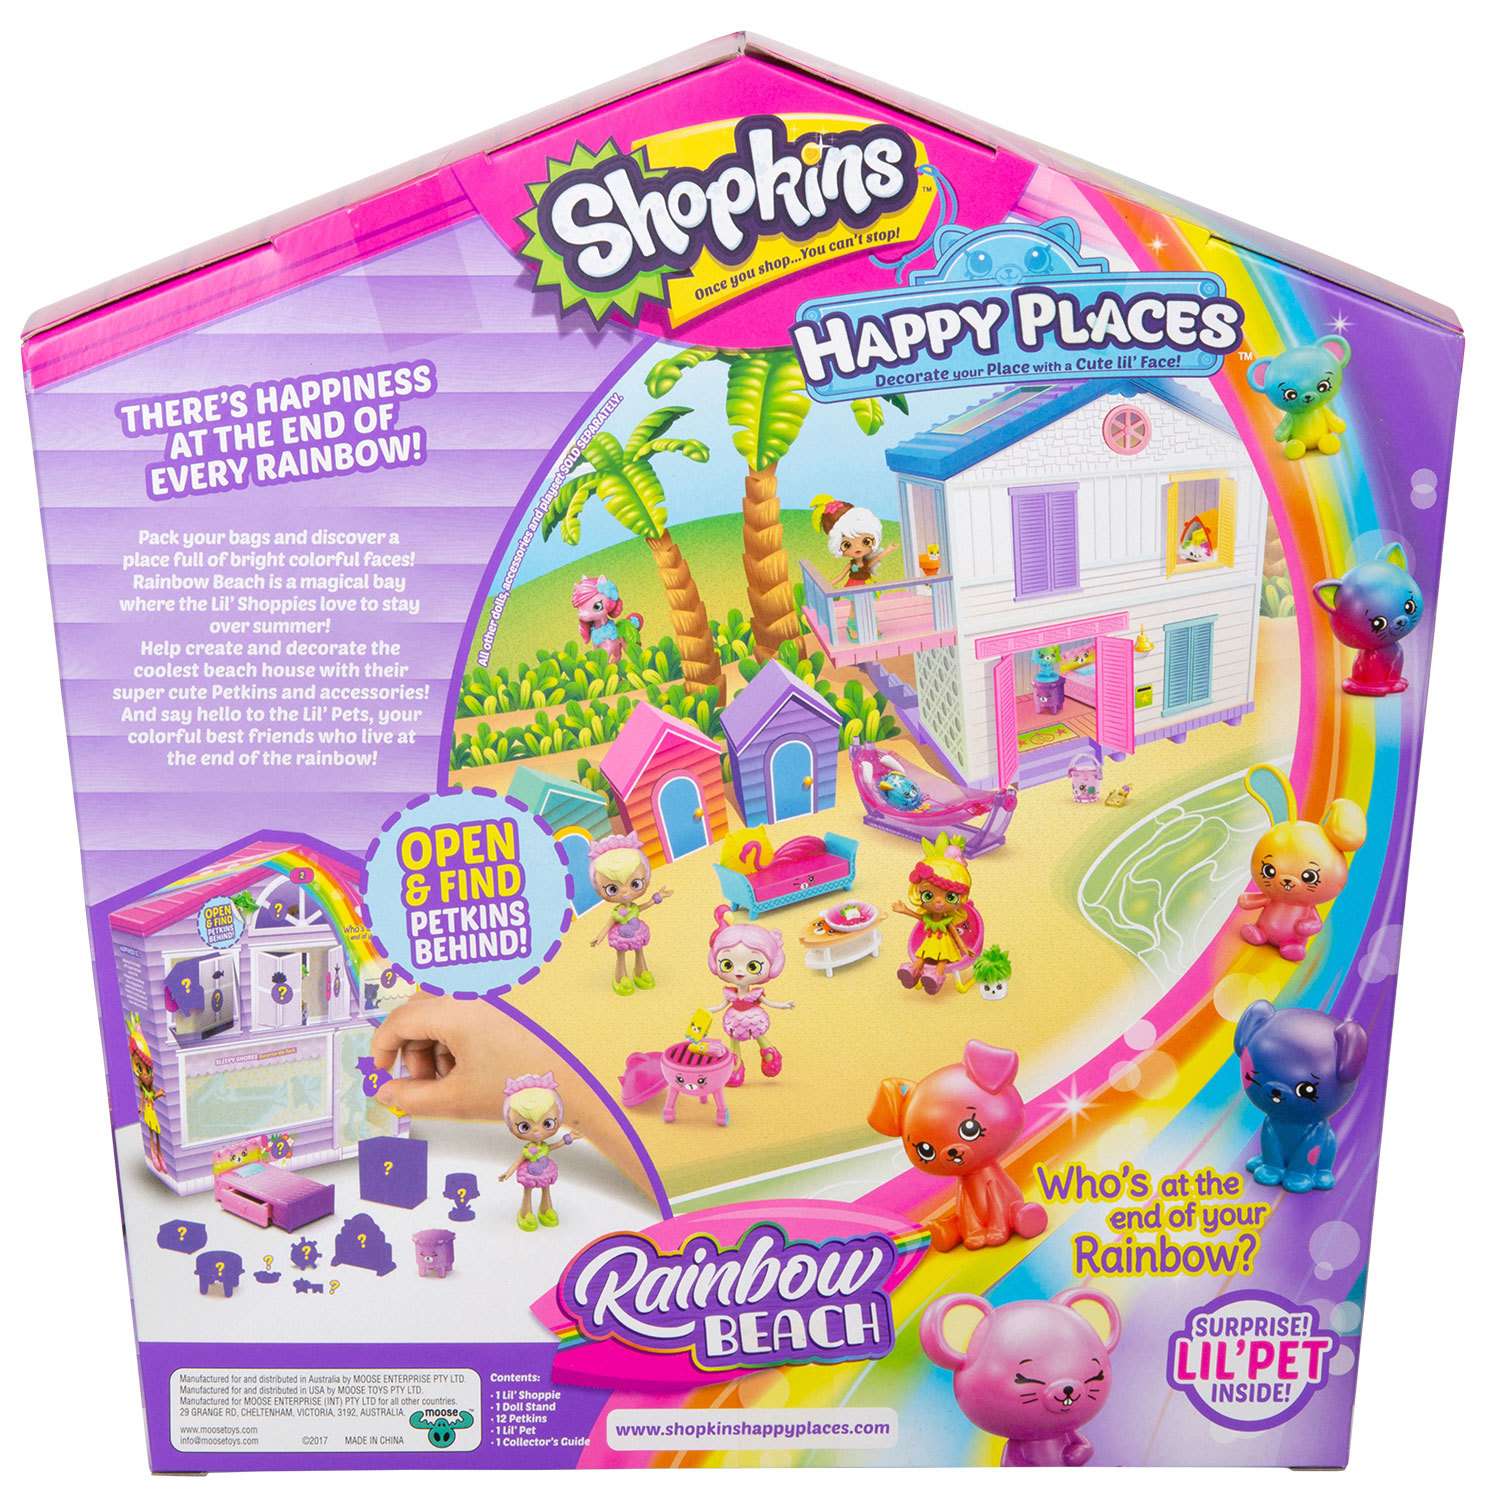 Набор Happy Places Shopkins (Happy Places) Радужные сны 56855 - фото 4